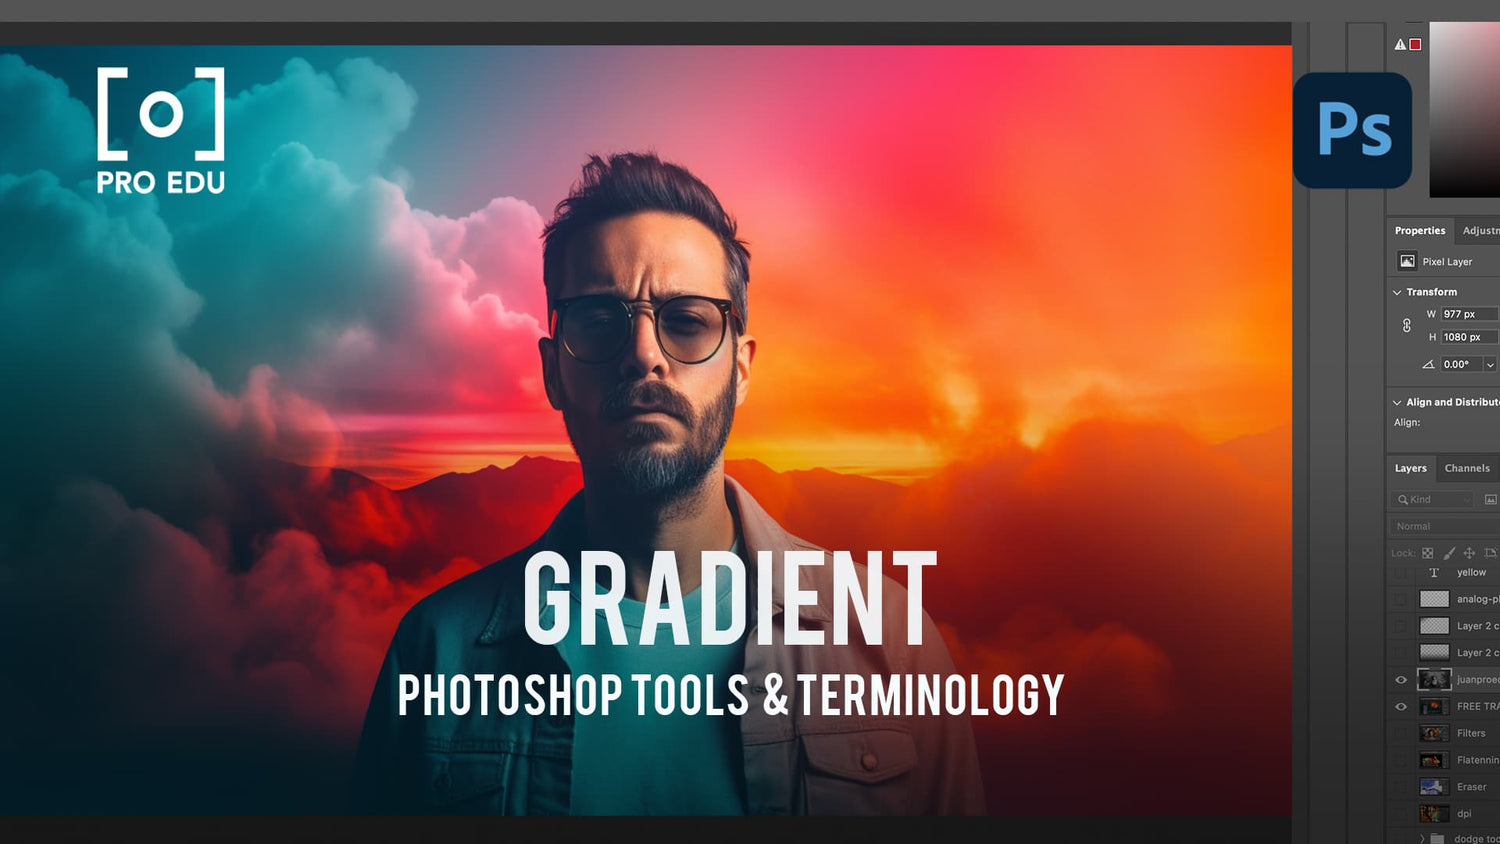 Gradient Tool in Photoshop - PRO EDU Guide